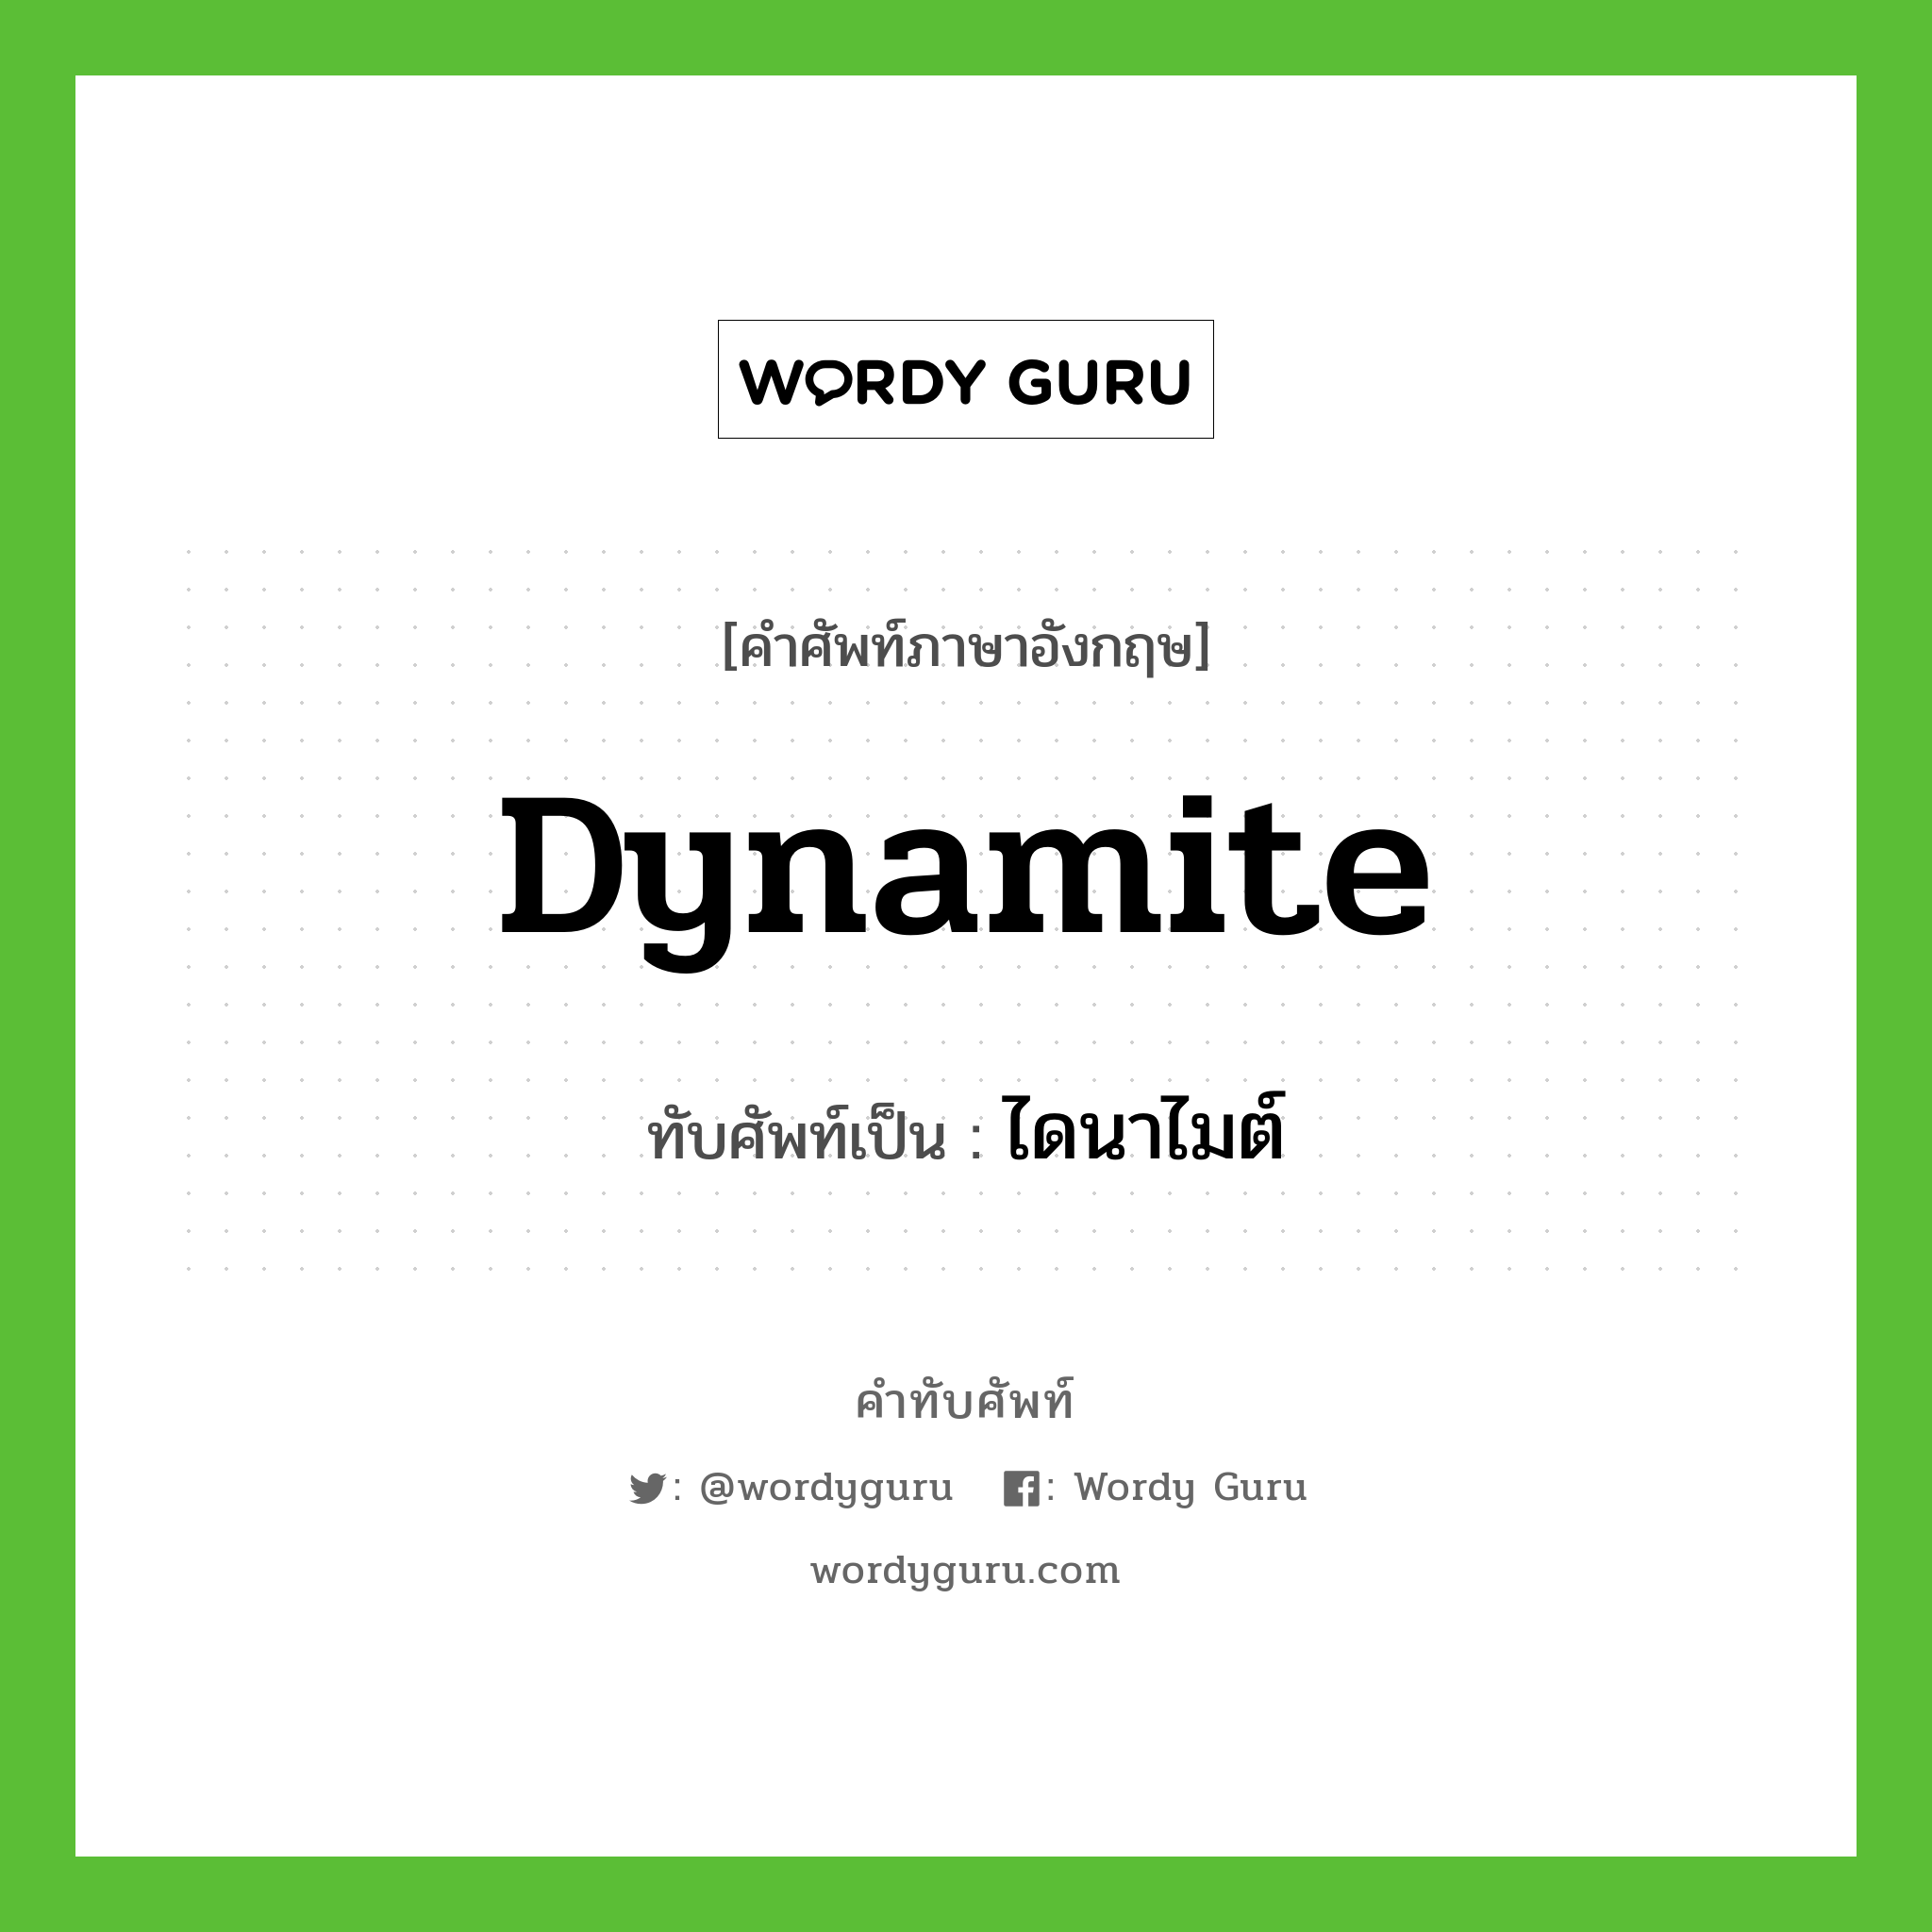 dynamite เขียนเป็นคำไทยว่าอะไร?, คำศัพท์ภาษาอังกฤษ dynamite ทับศัพท์เป็น ไดนาไมต์